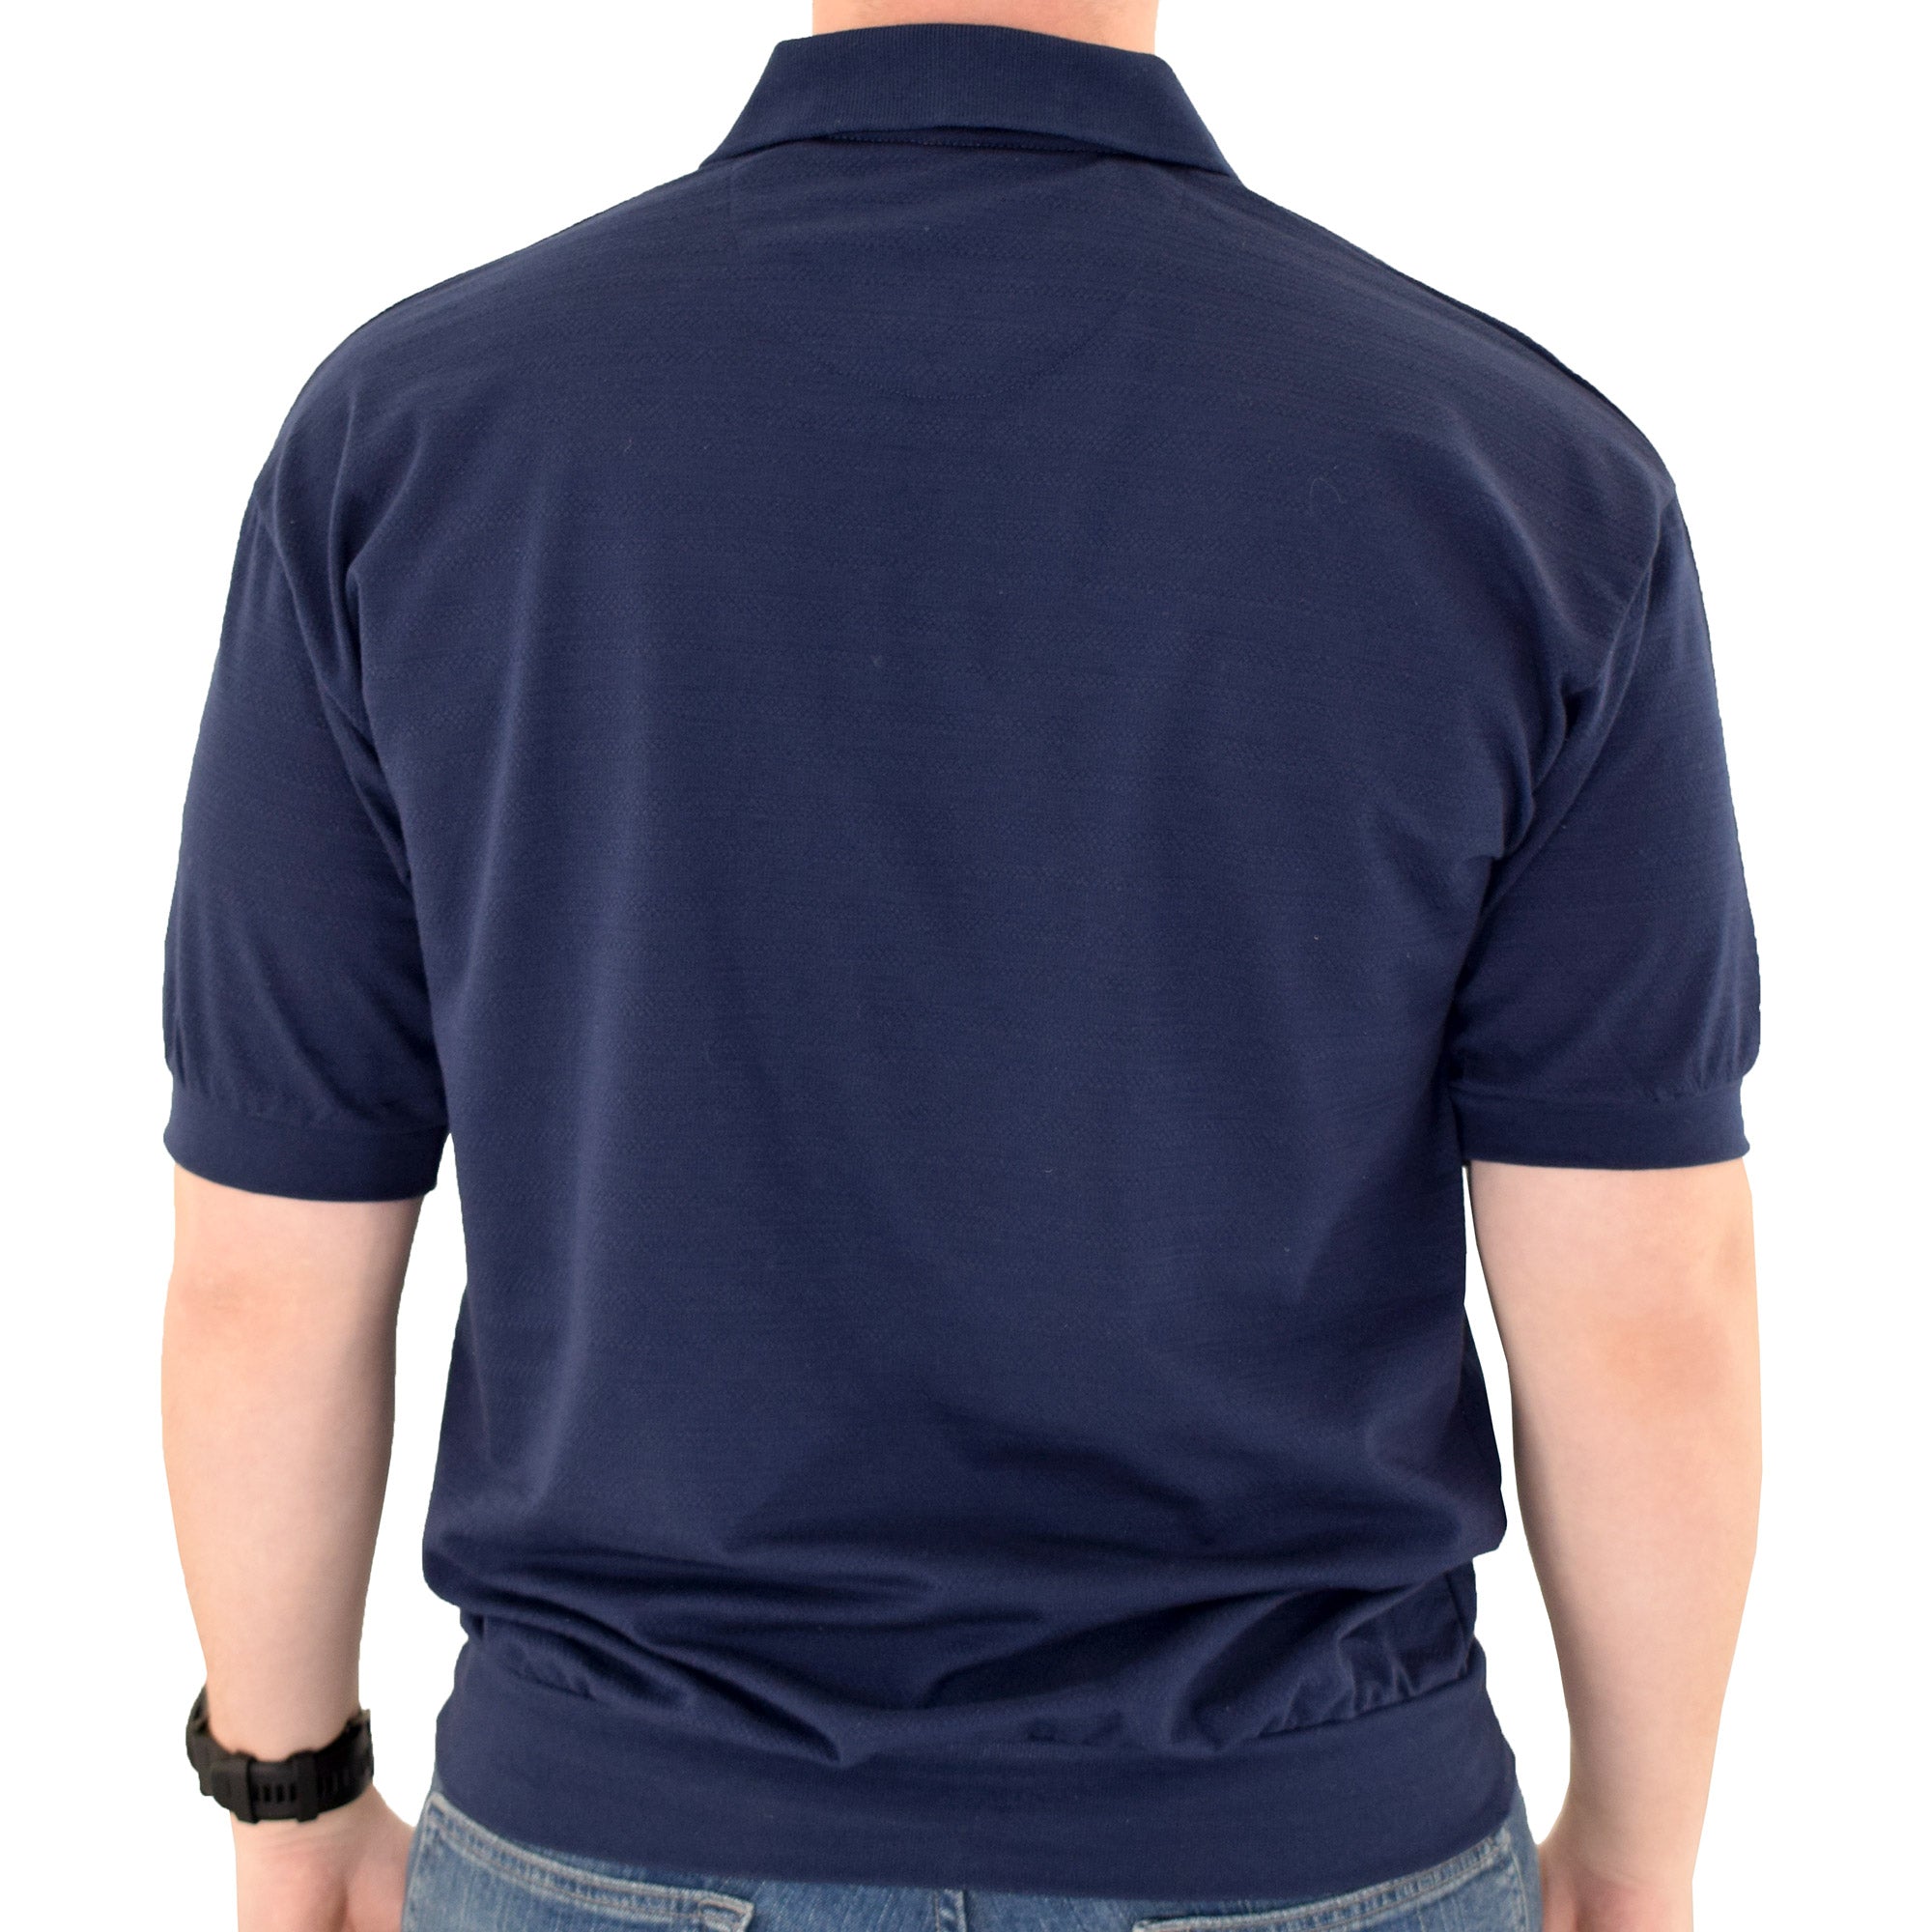 Classics by Palmland Short Sleeve Banded Bottom Shirt 6070-209BT Navy - theflagshirt